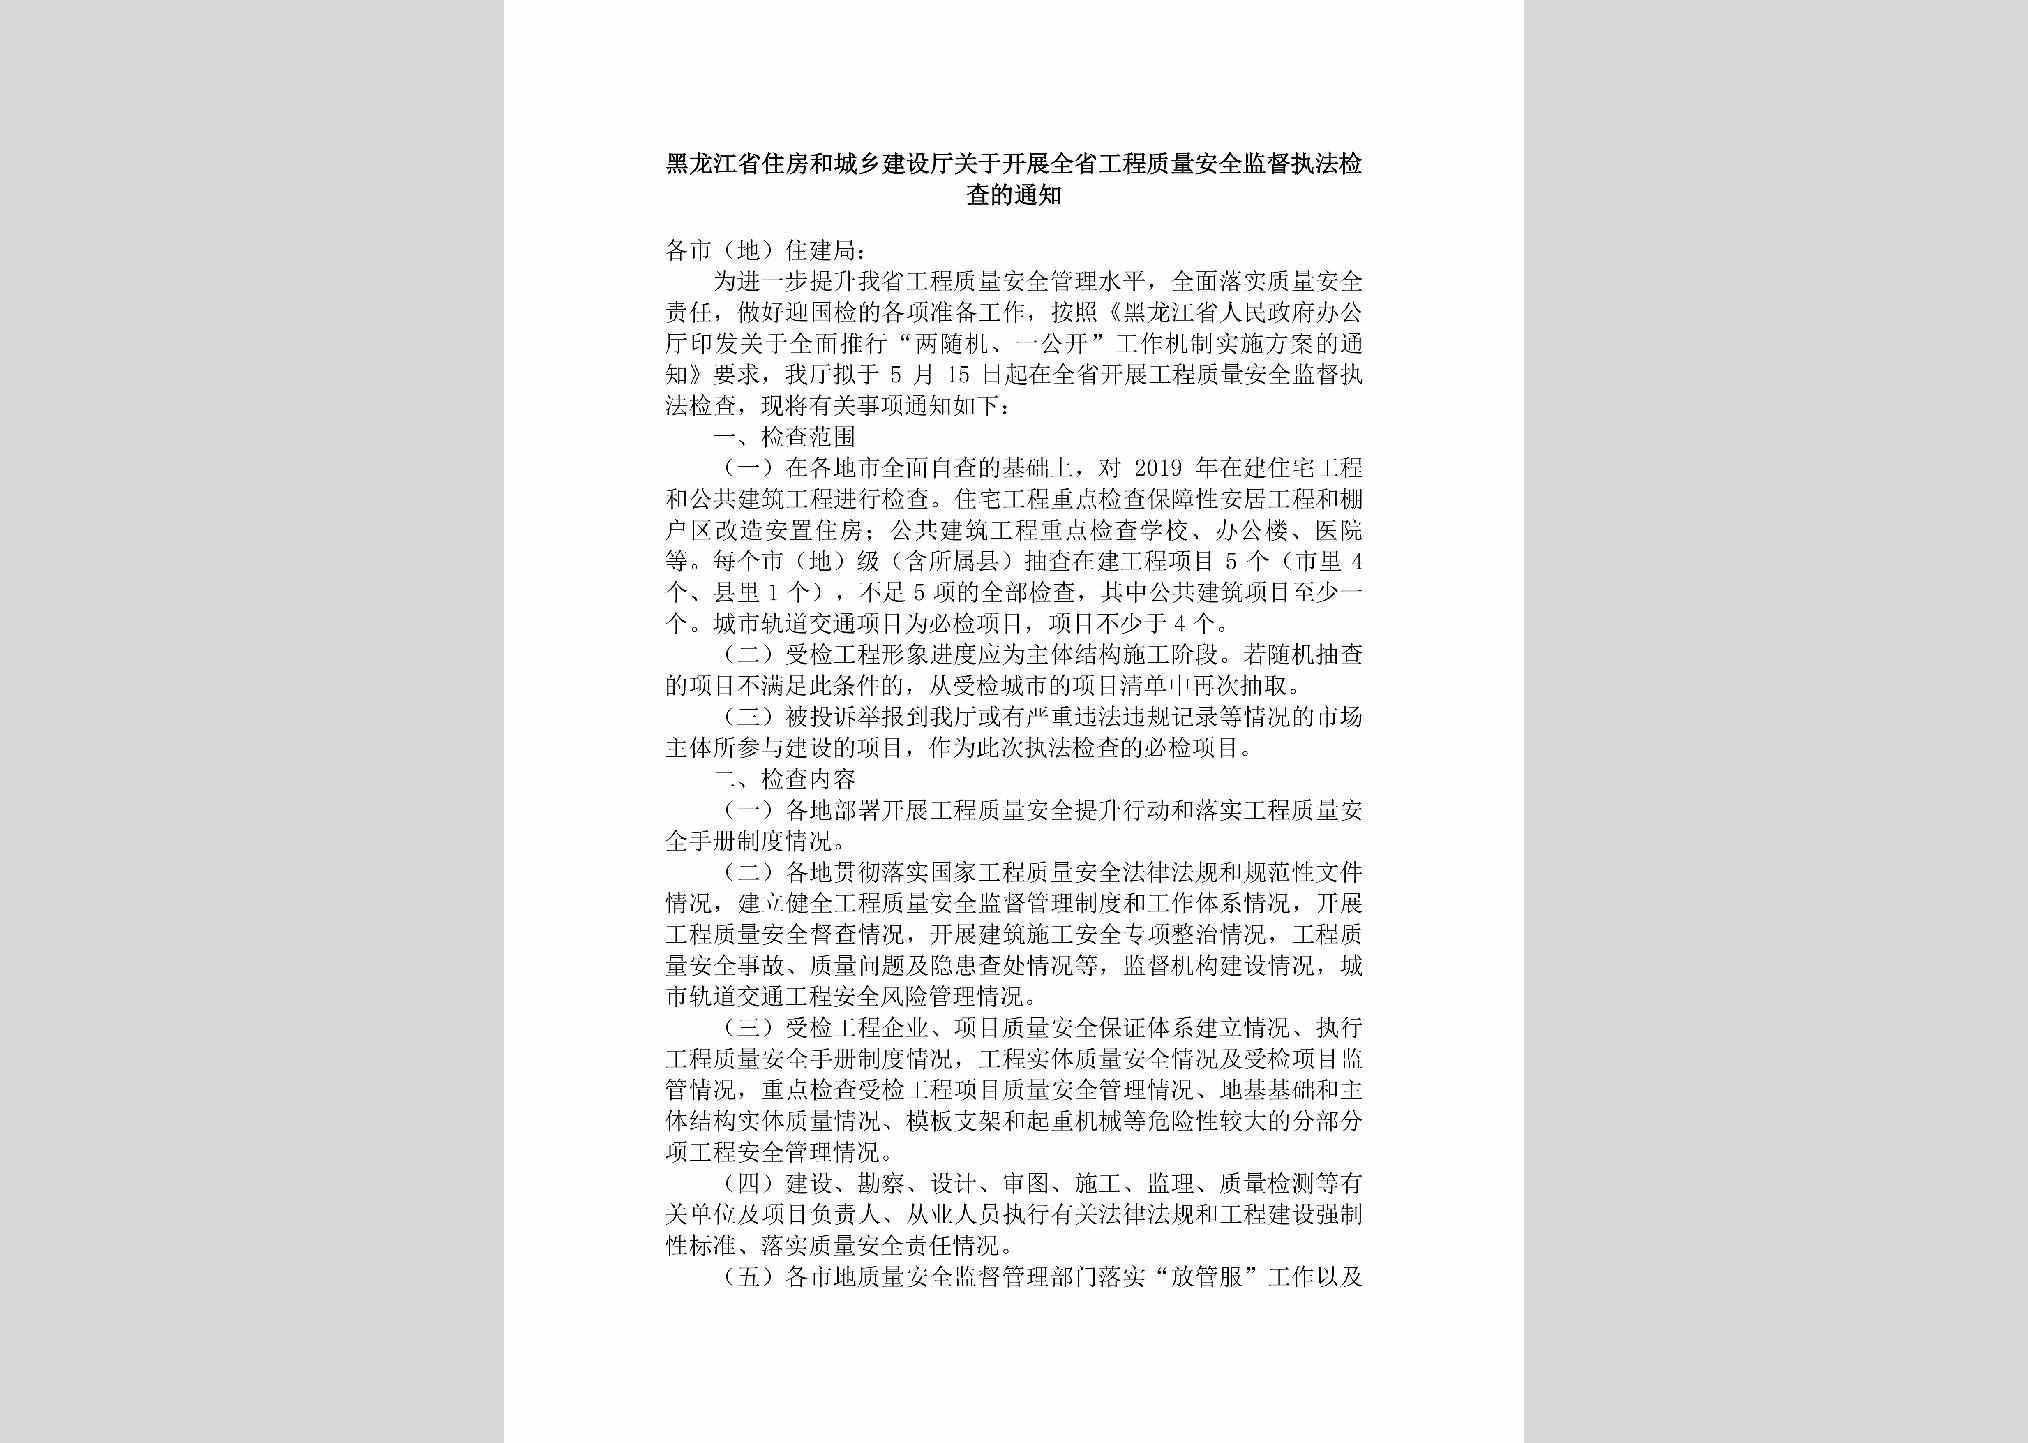 HLJ-AQJDZFJC-2019：黑龙江省住房和城乡建设厅关于开展全省工程质量安全监督执法检查的通知